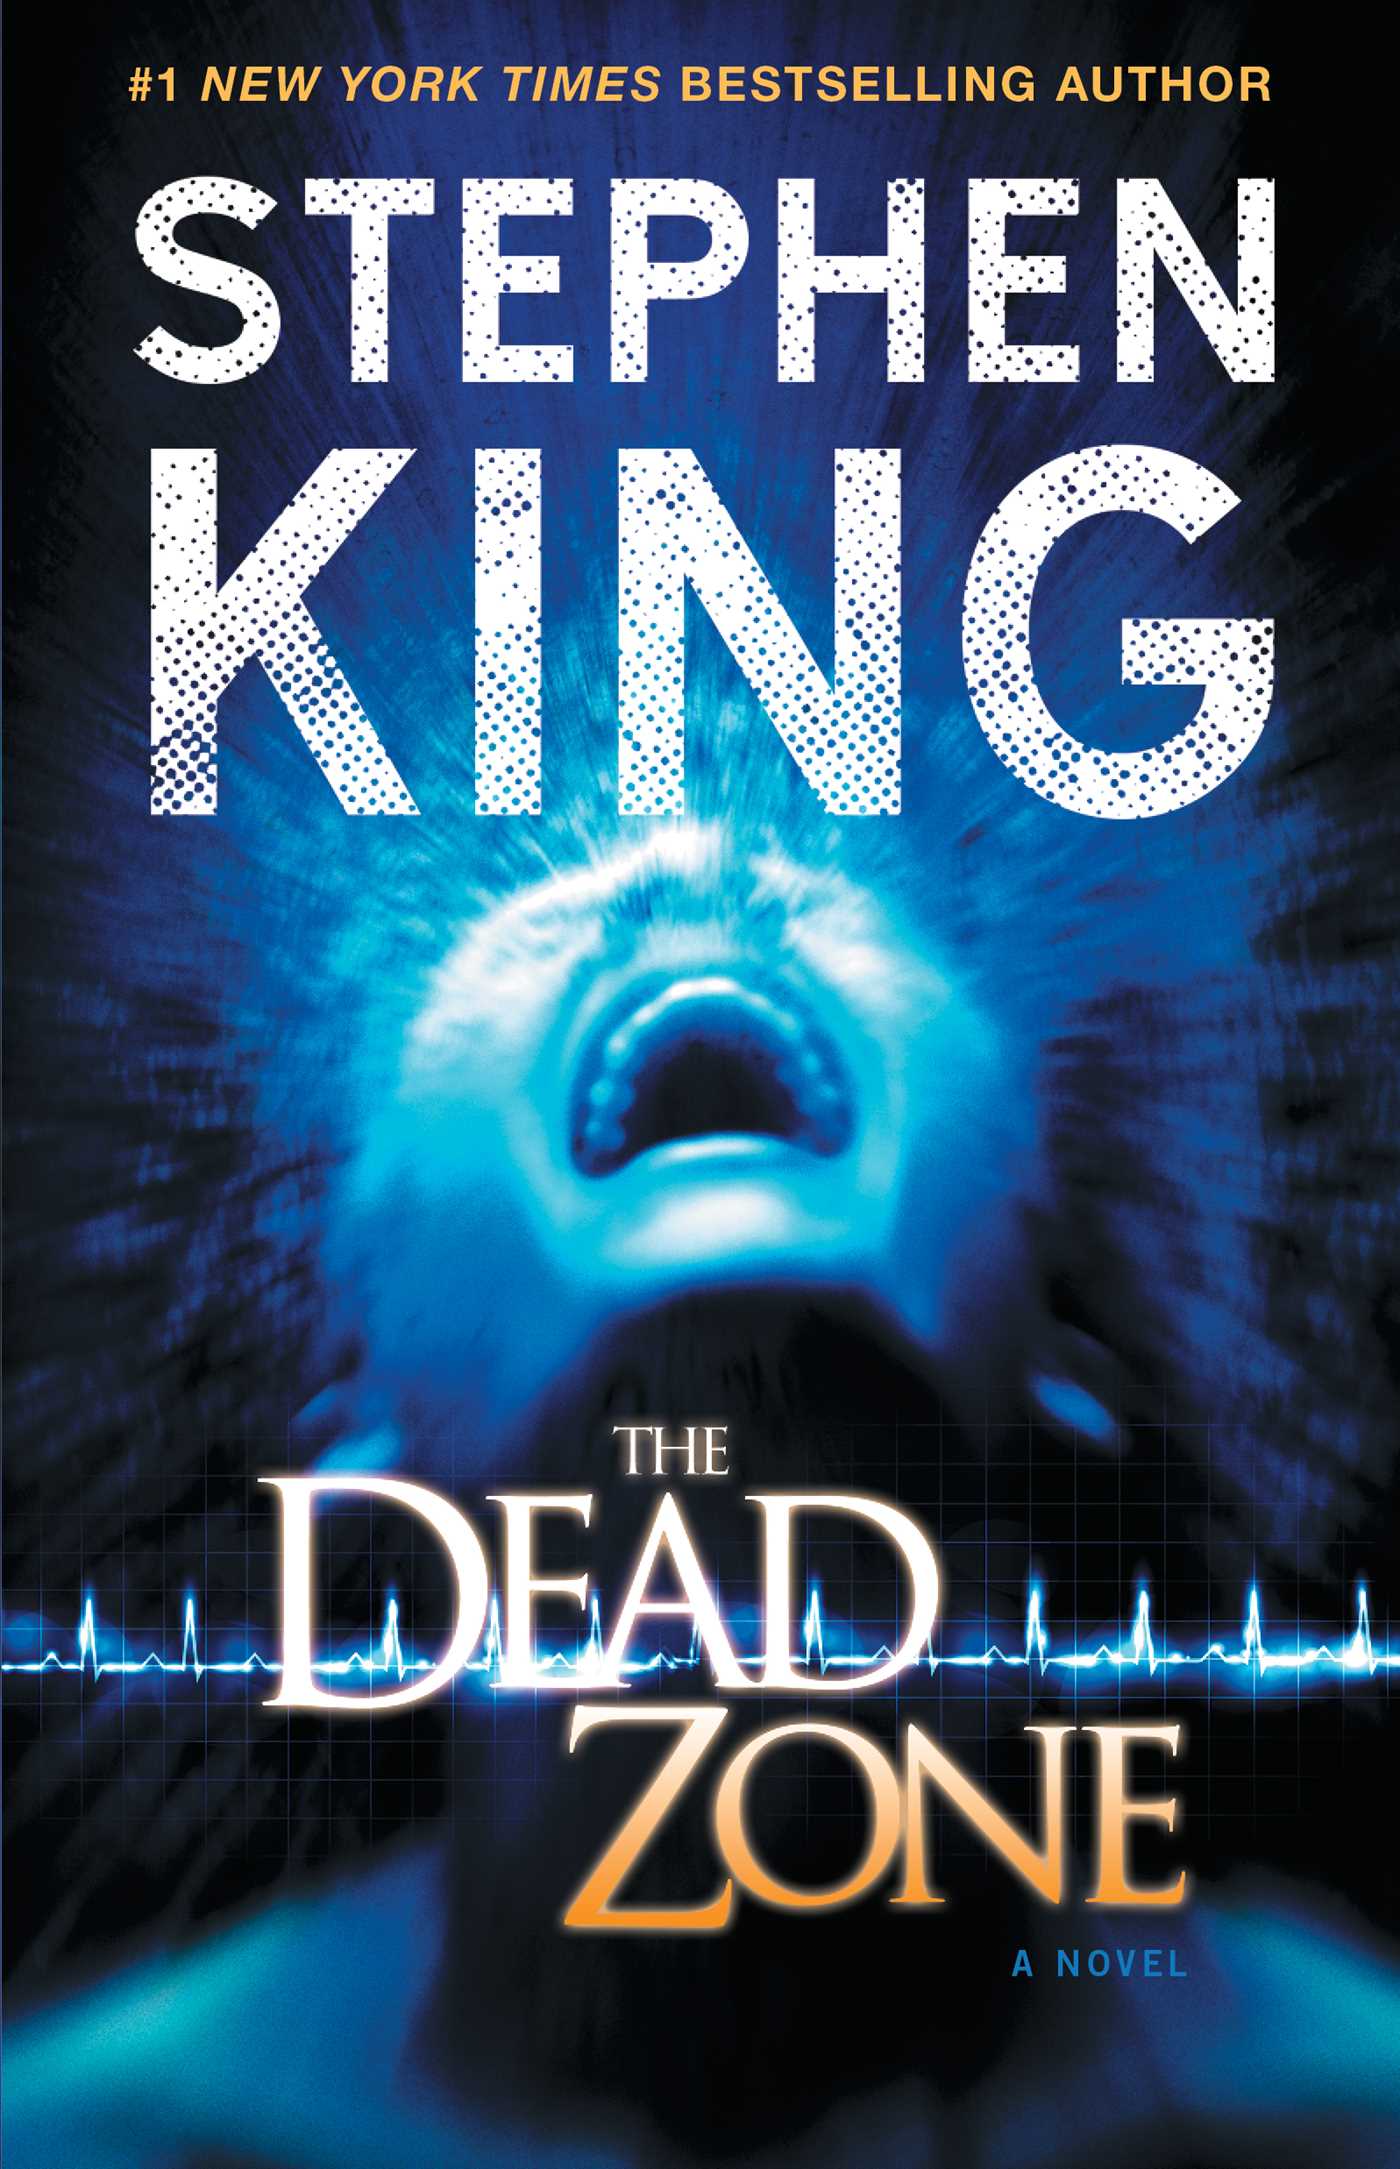 The Dead Zone (novel)